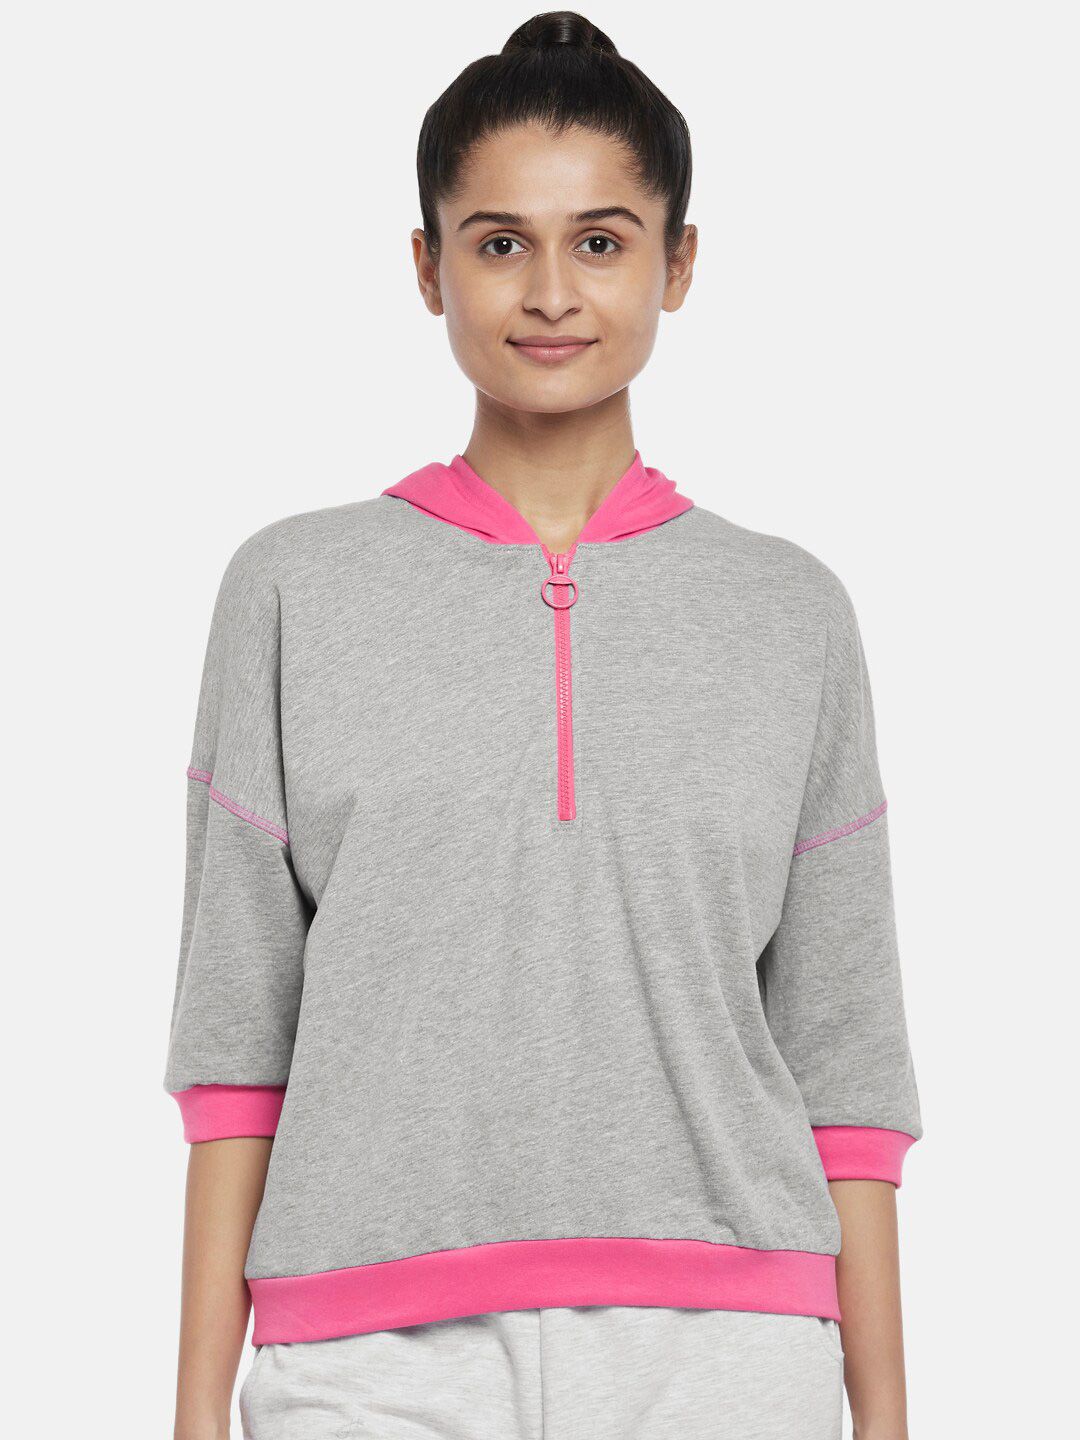 Ajile by Pantaloons Women Grey Melange & Pink Solid Sweatshirt Price in India